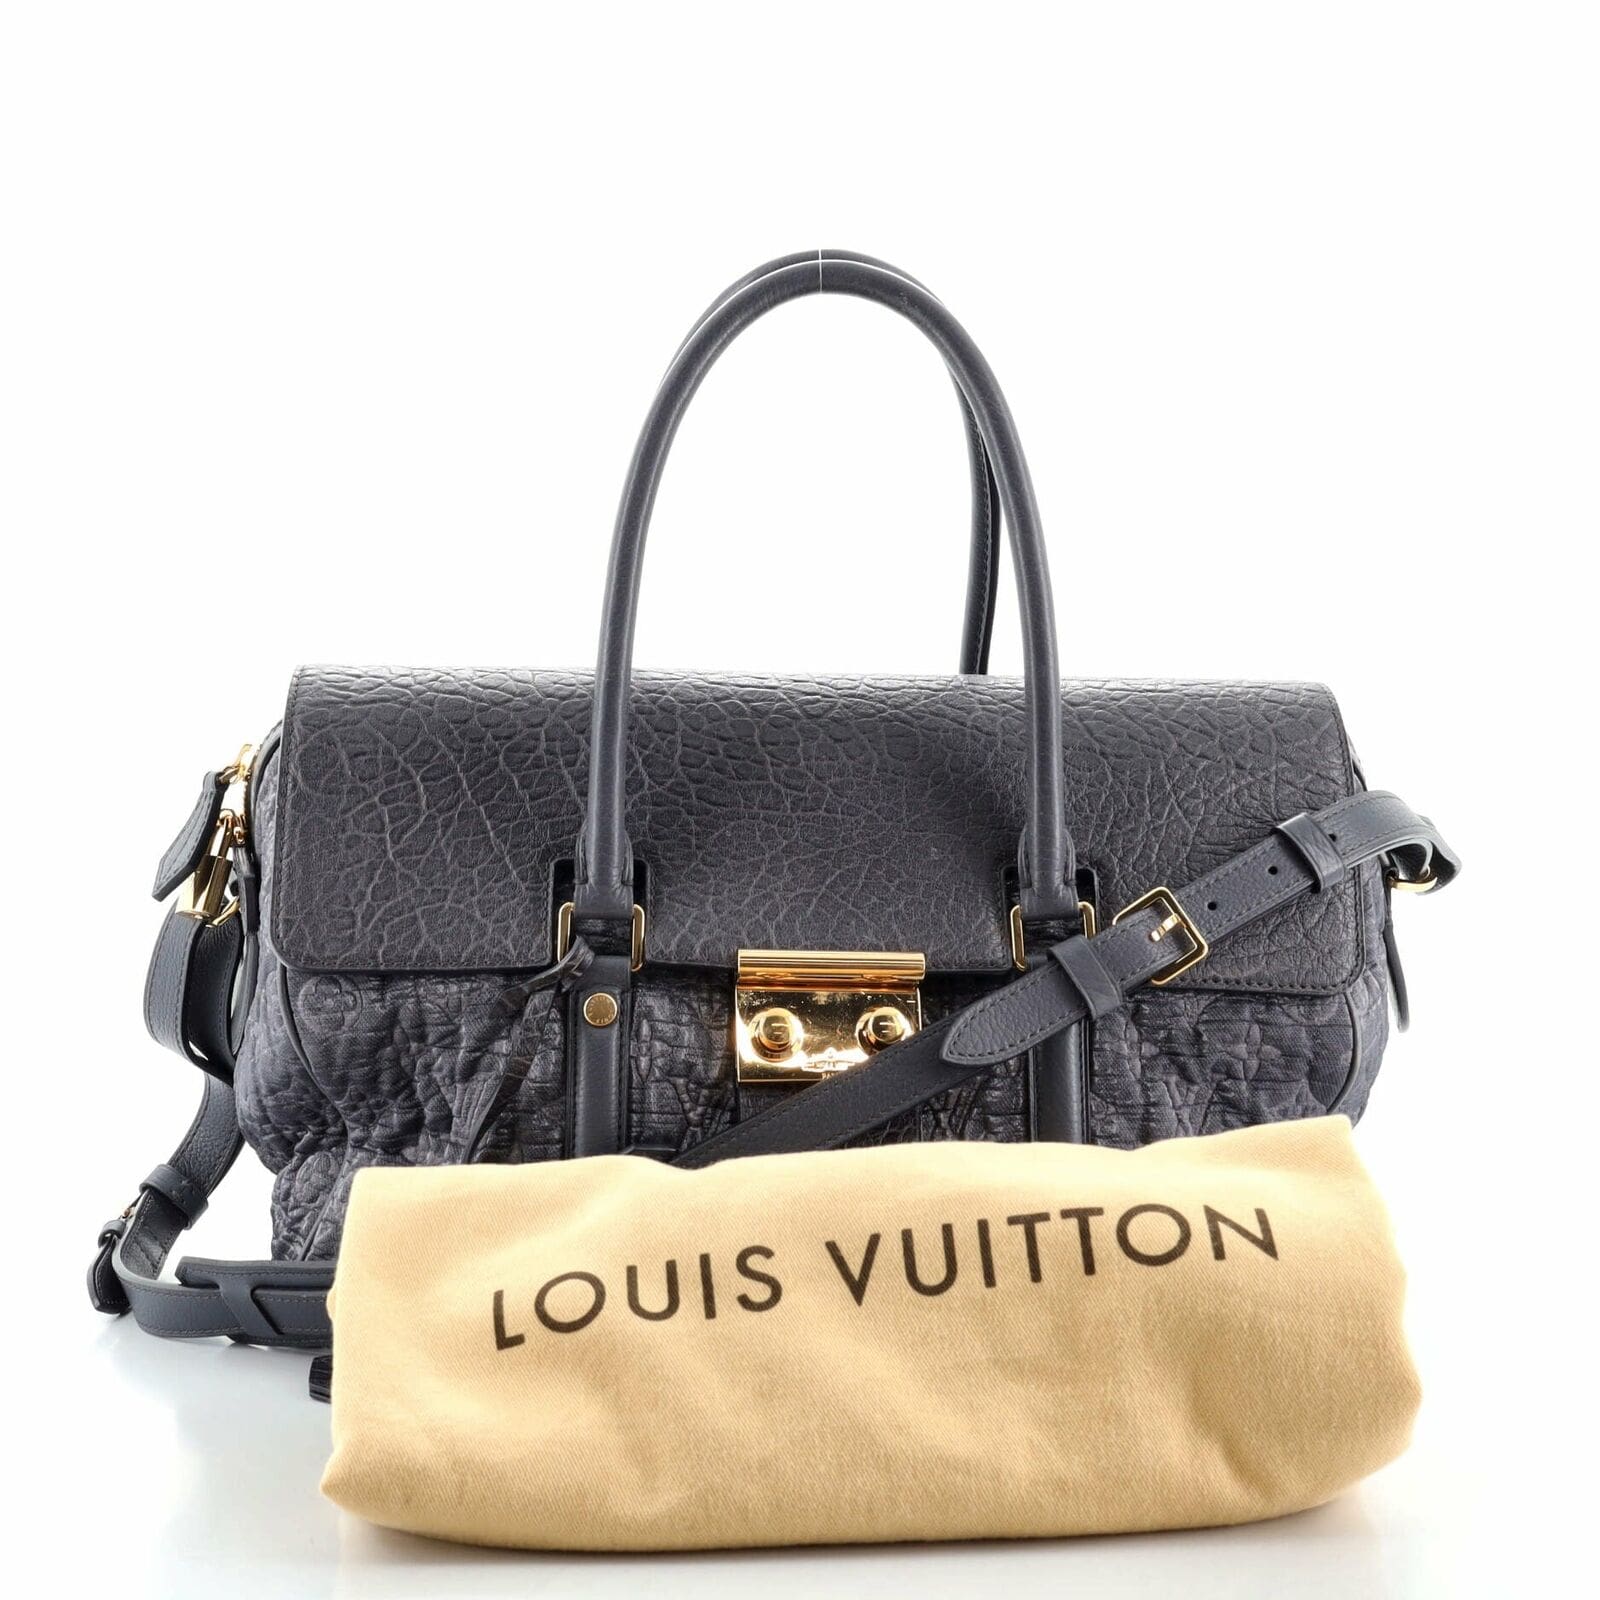 Louis Vuitton archivos - Página 2 de 3 - Luxury News & Magazines -  MyLuxePoint